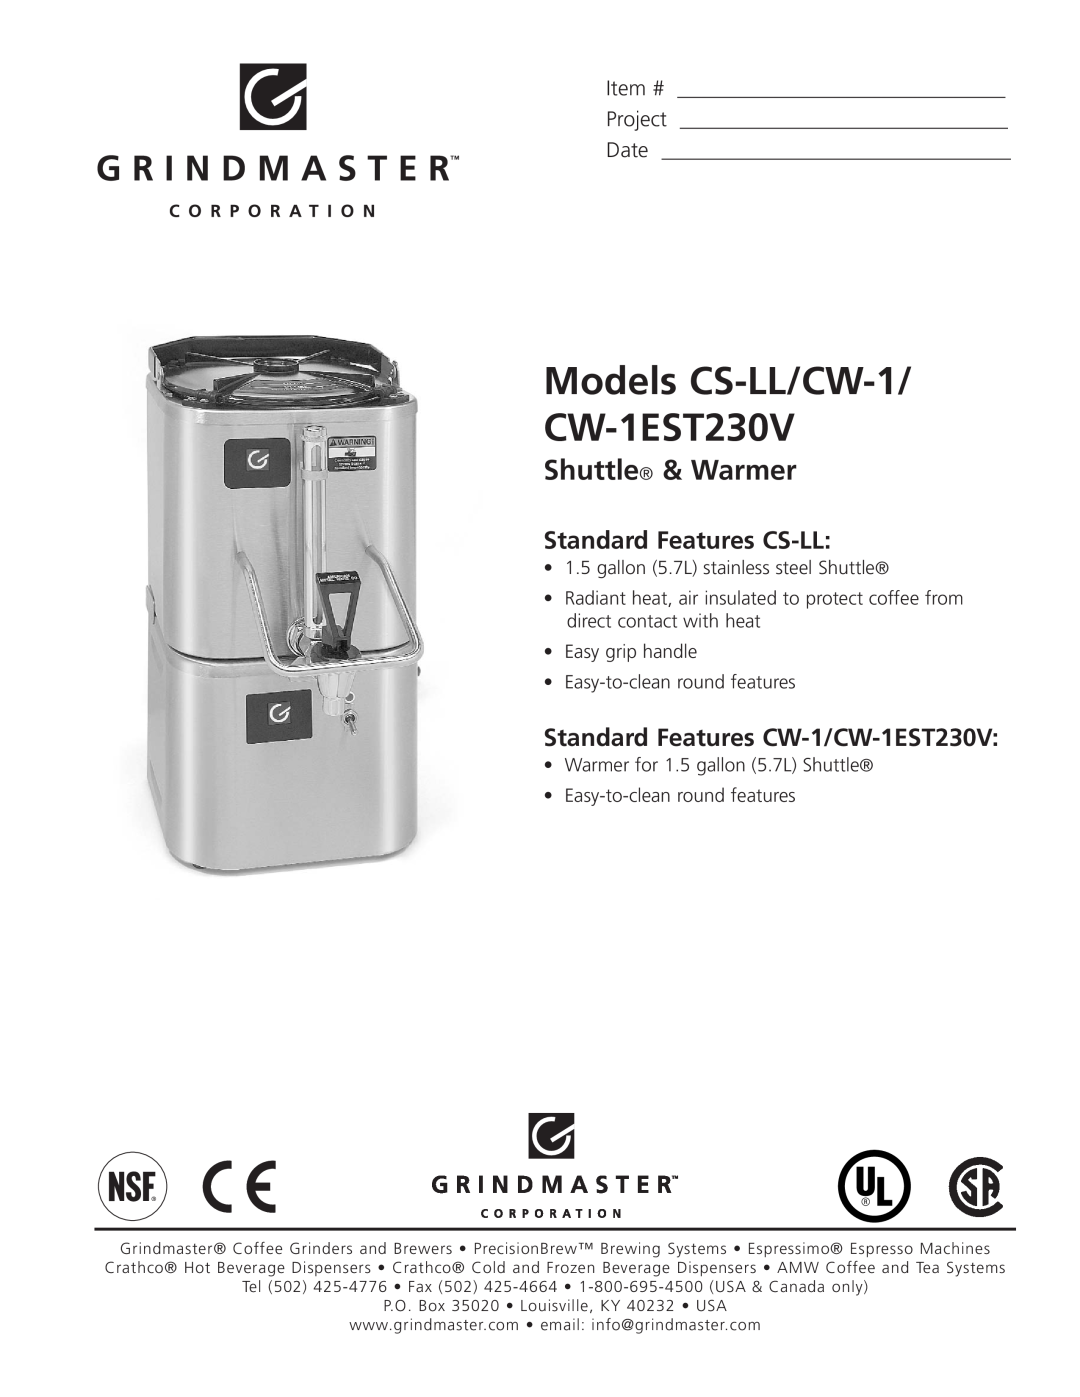 Grindmaster manual Standard Features CS-LL, Standard Features CW-1/CW-1EST230V, Models CS-LL/CW-1/ CW-1EST230V, Item # 